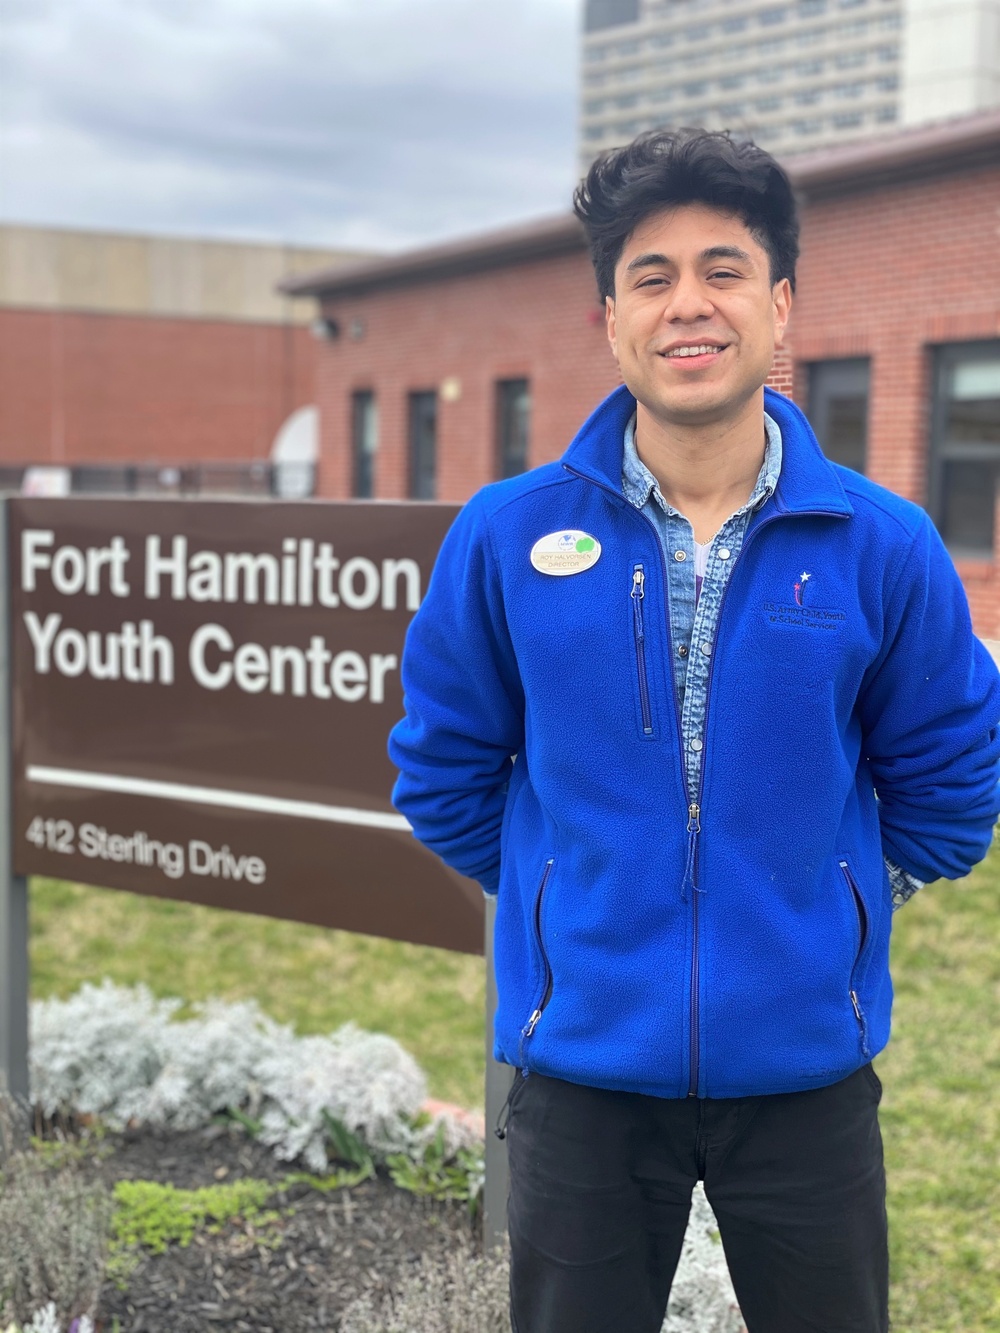 Fort Hamilton Youth Center earns accreditation